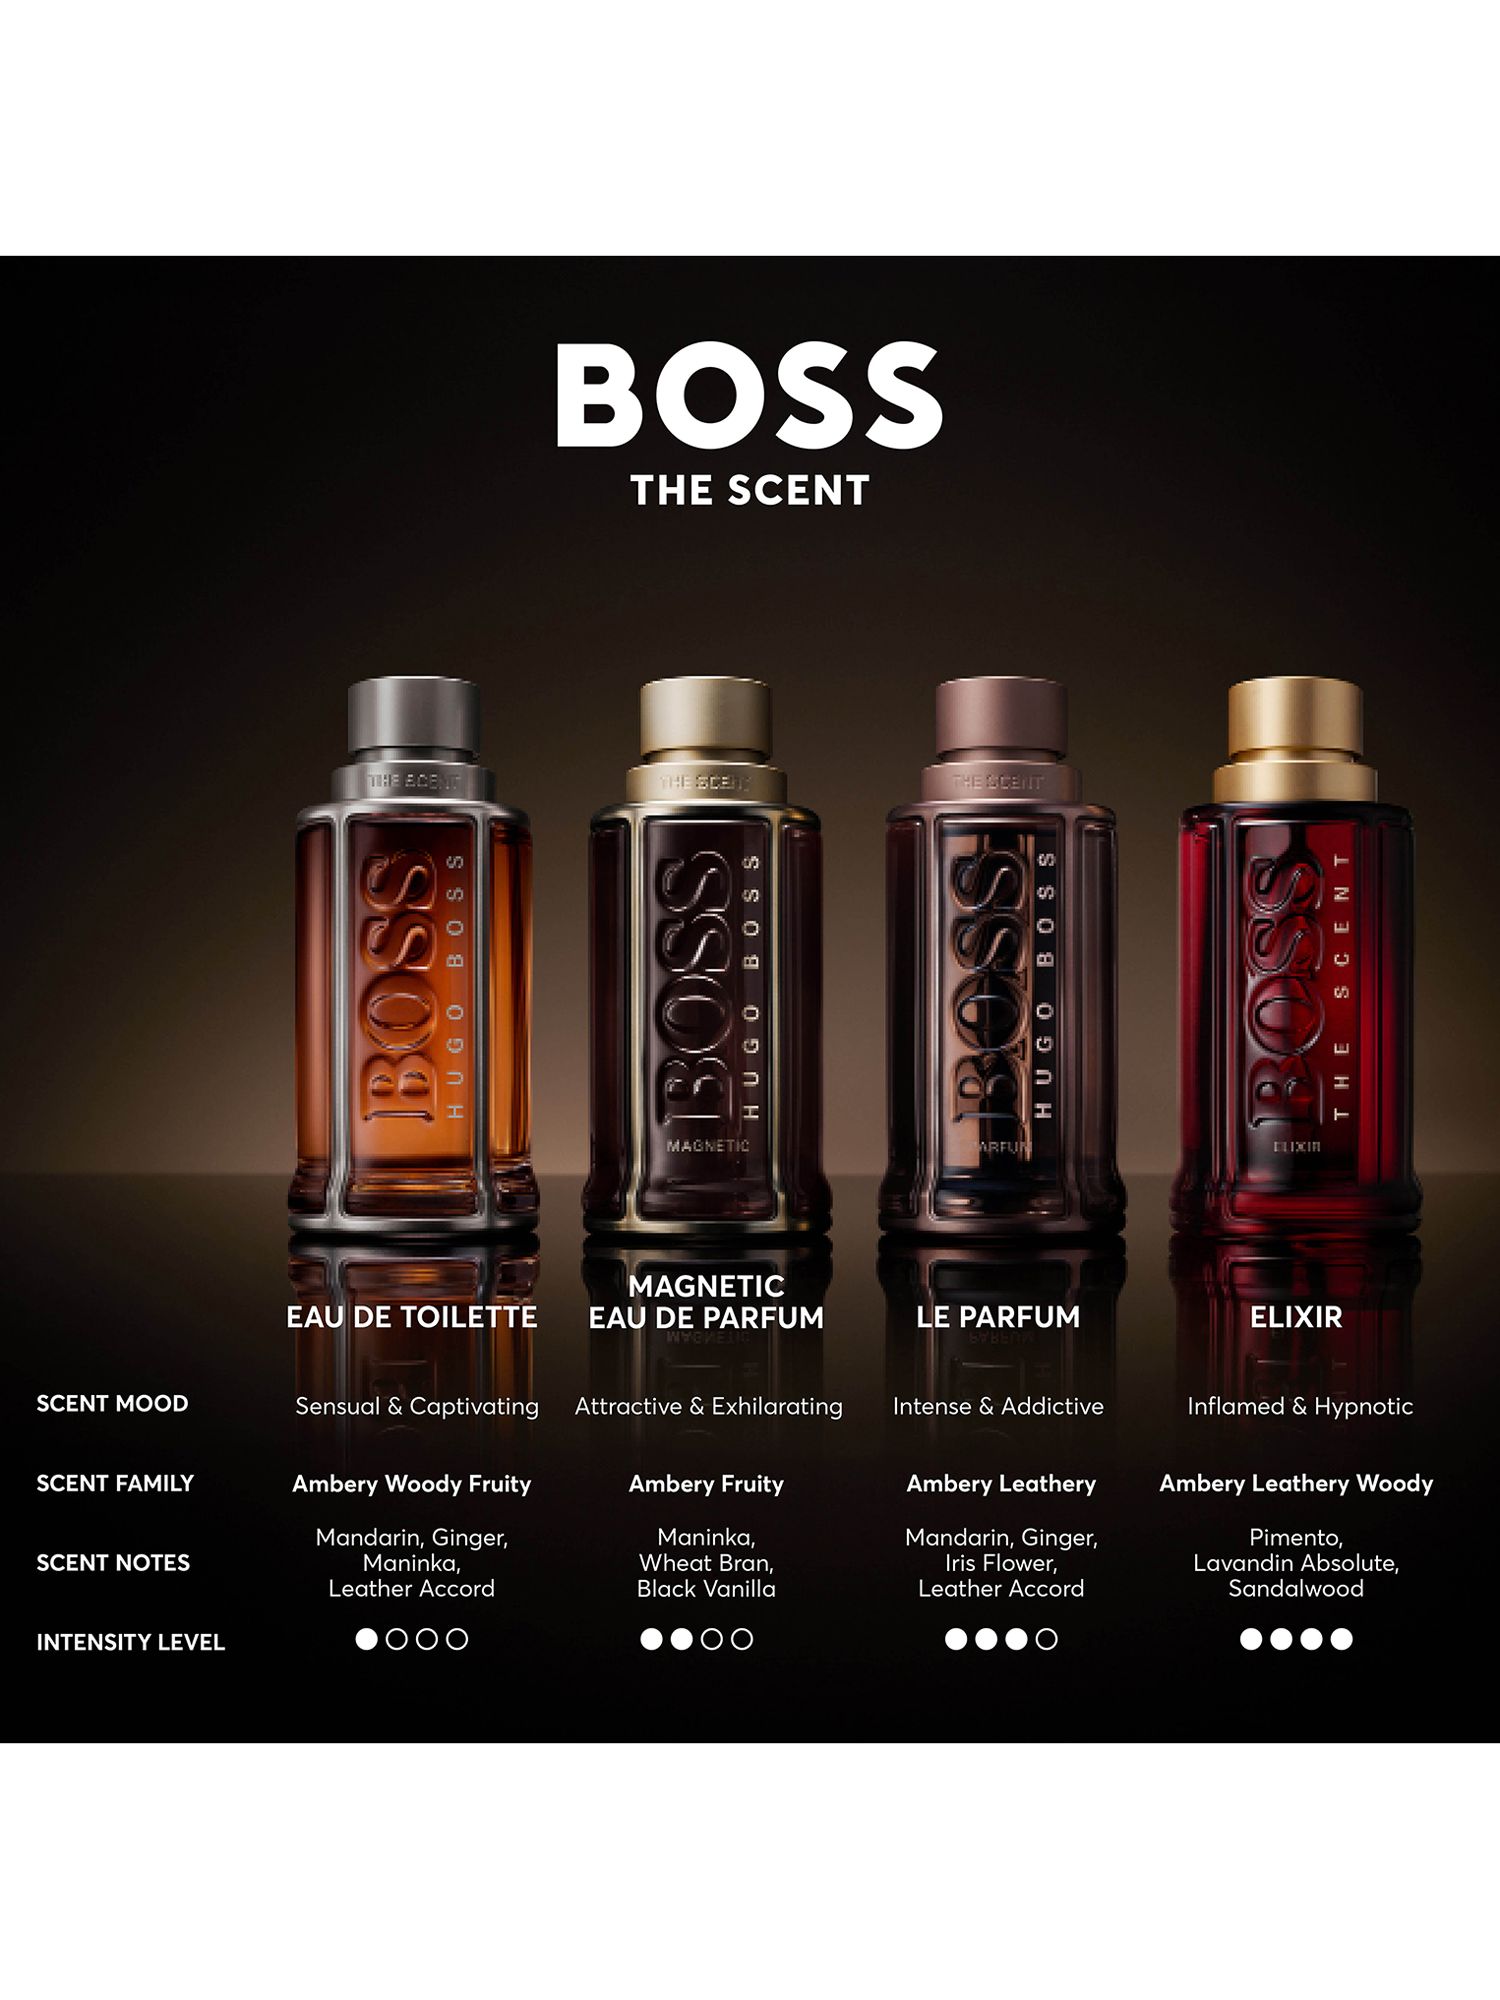 HUGO BOSS BOSS The Scent Elixir For Him Parfum, 50ml